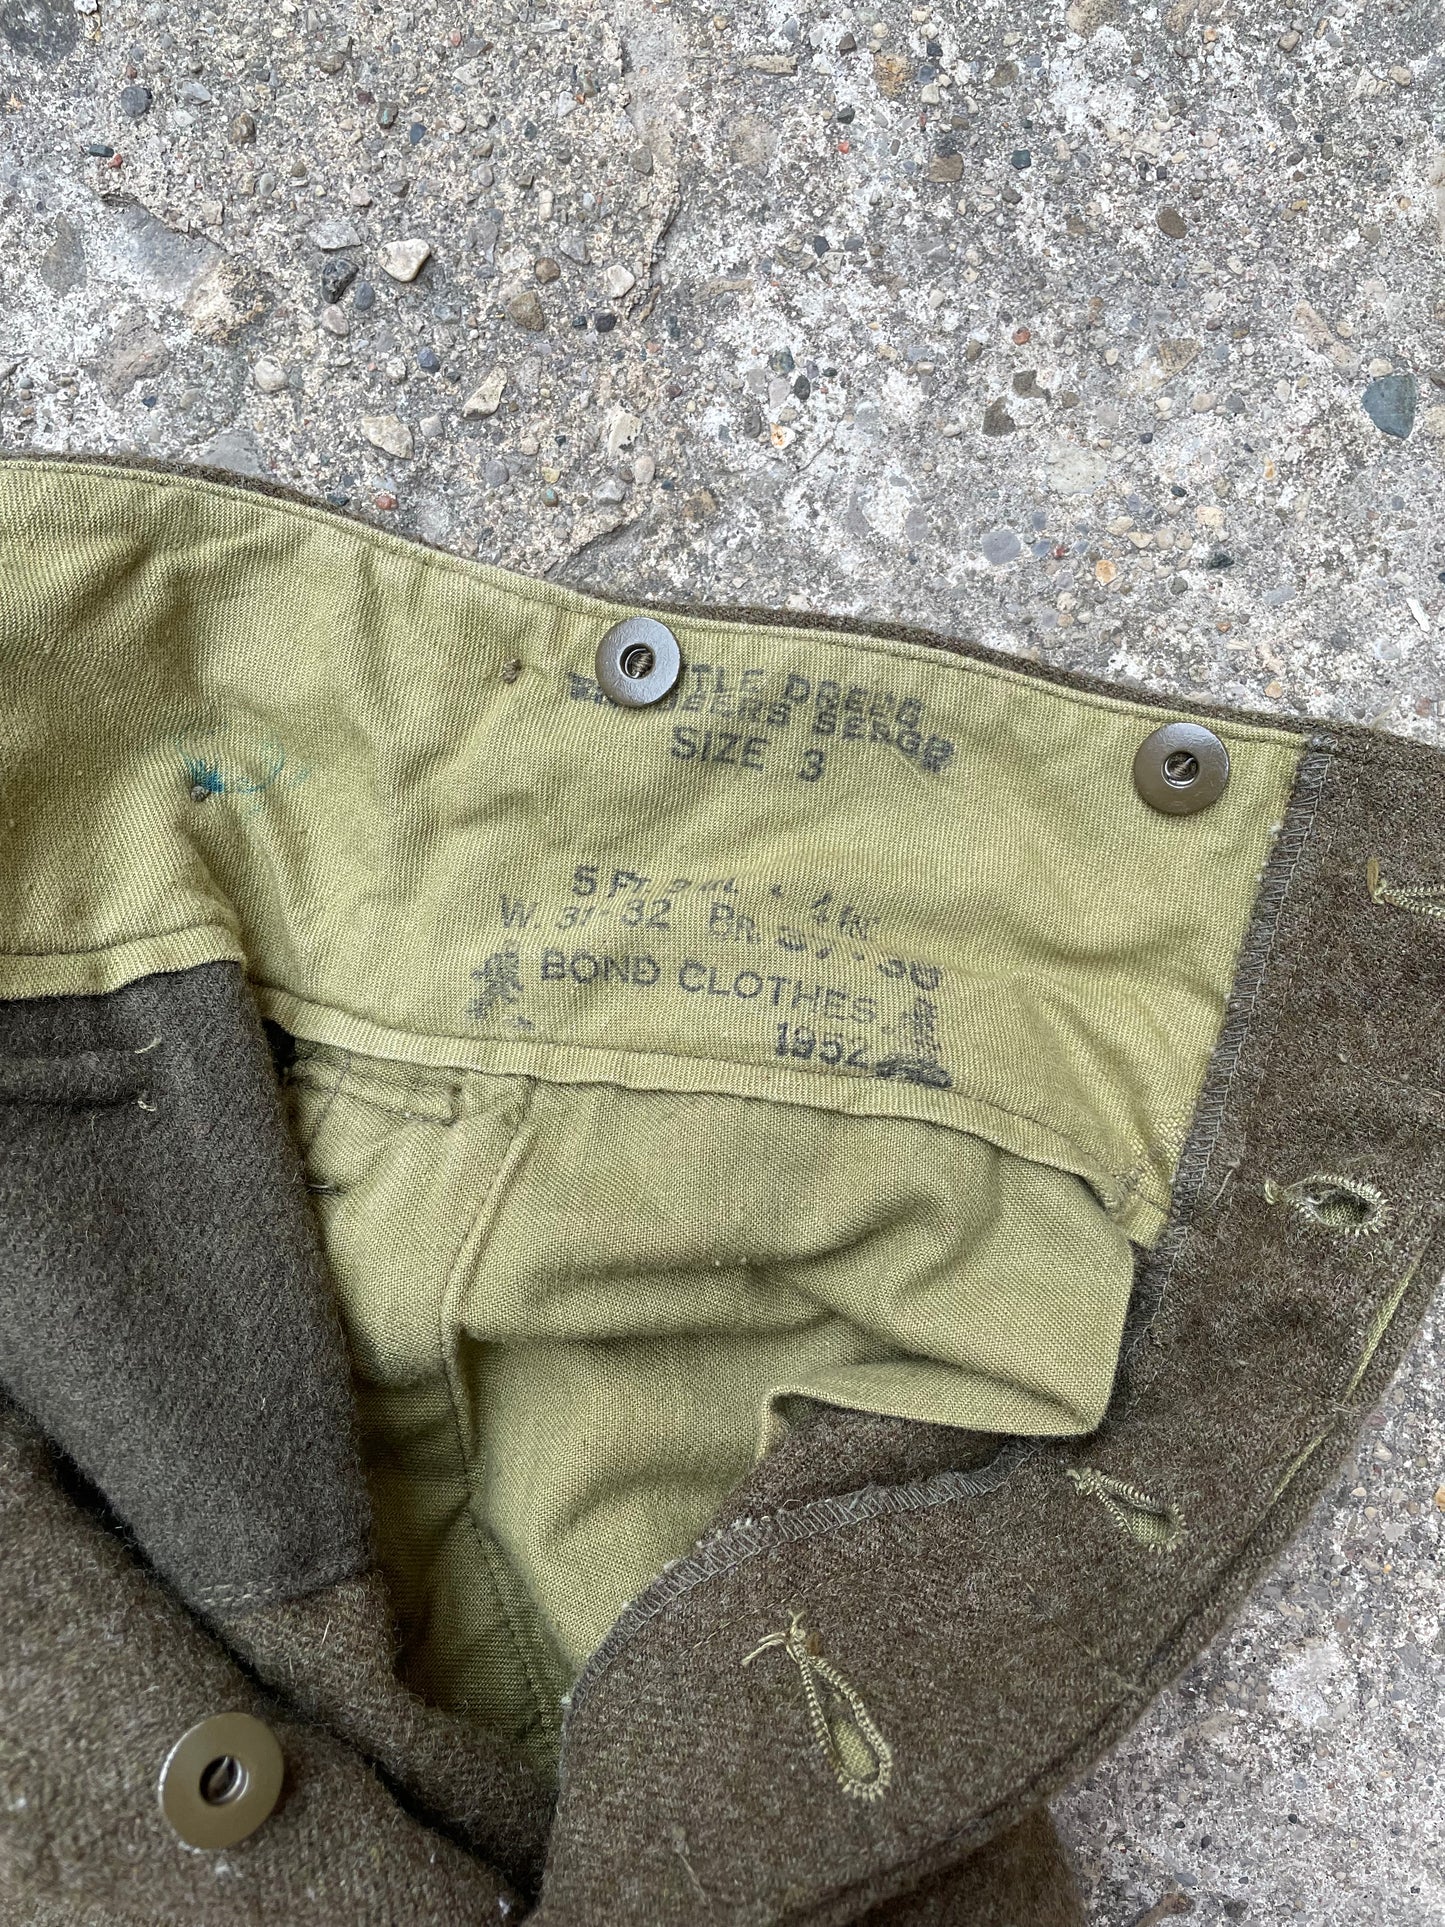 1952 Canadian Military Wool Battle Dress Trousers/Pants - 32